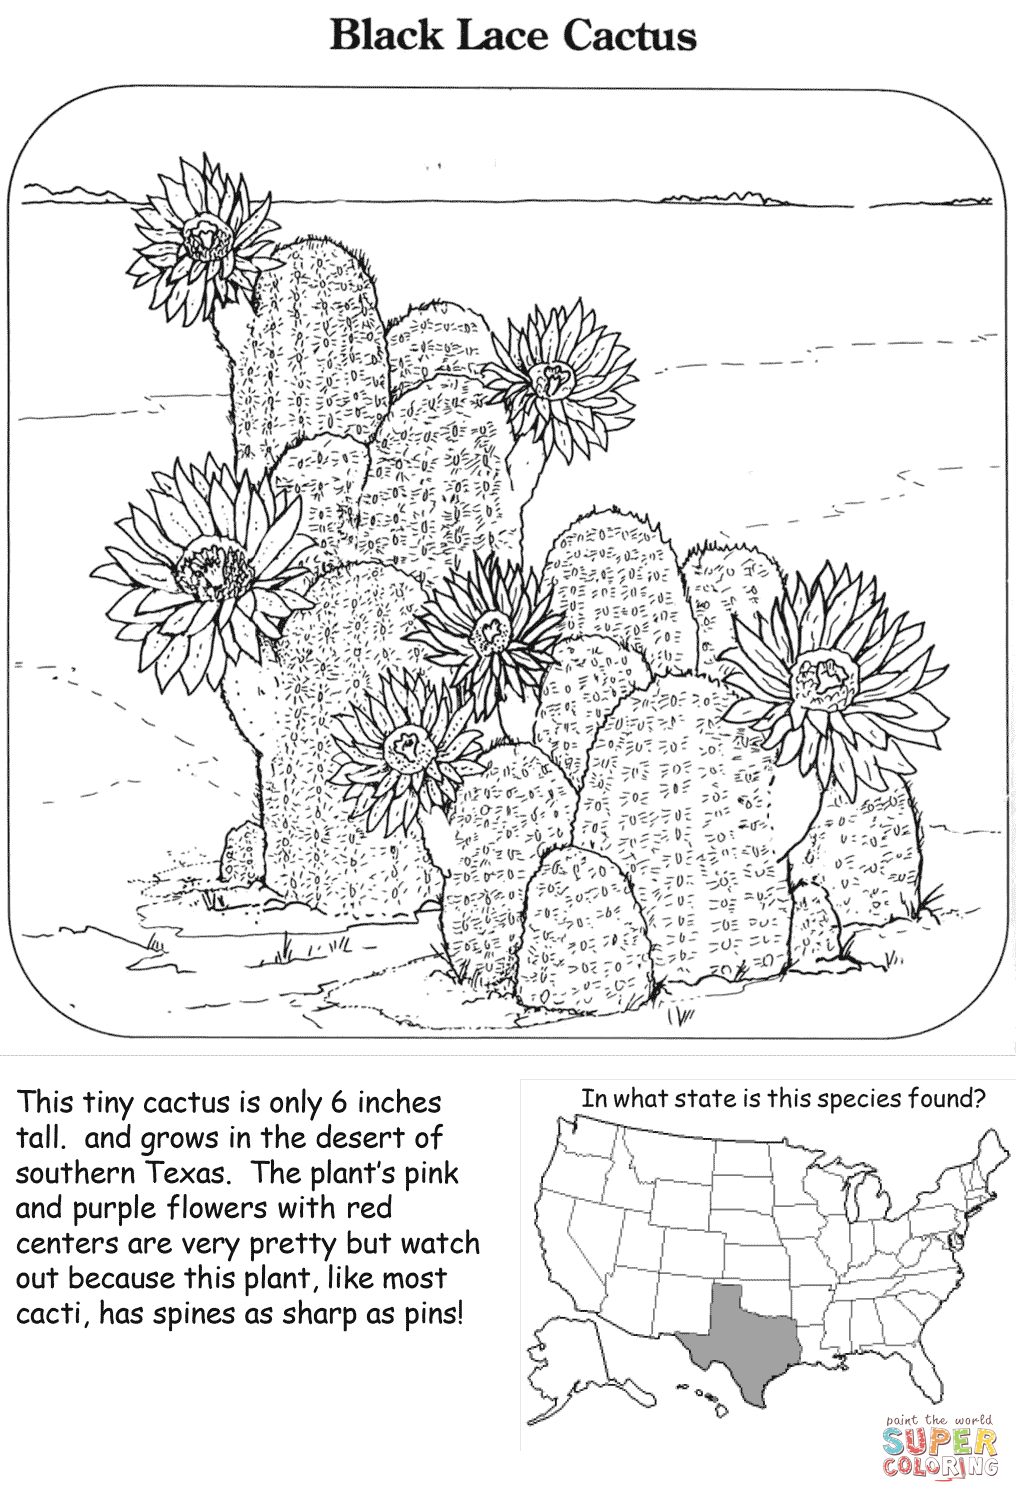 Black Lace Cactus